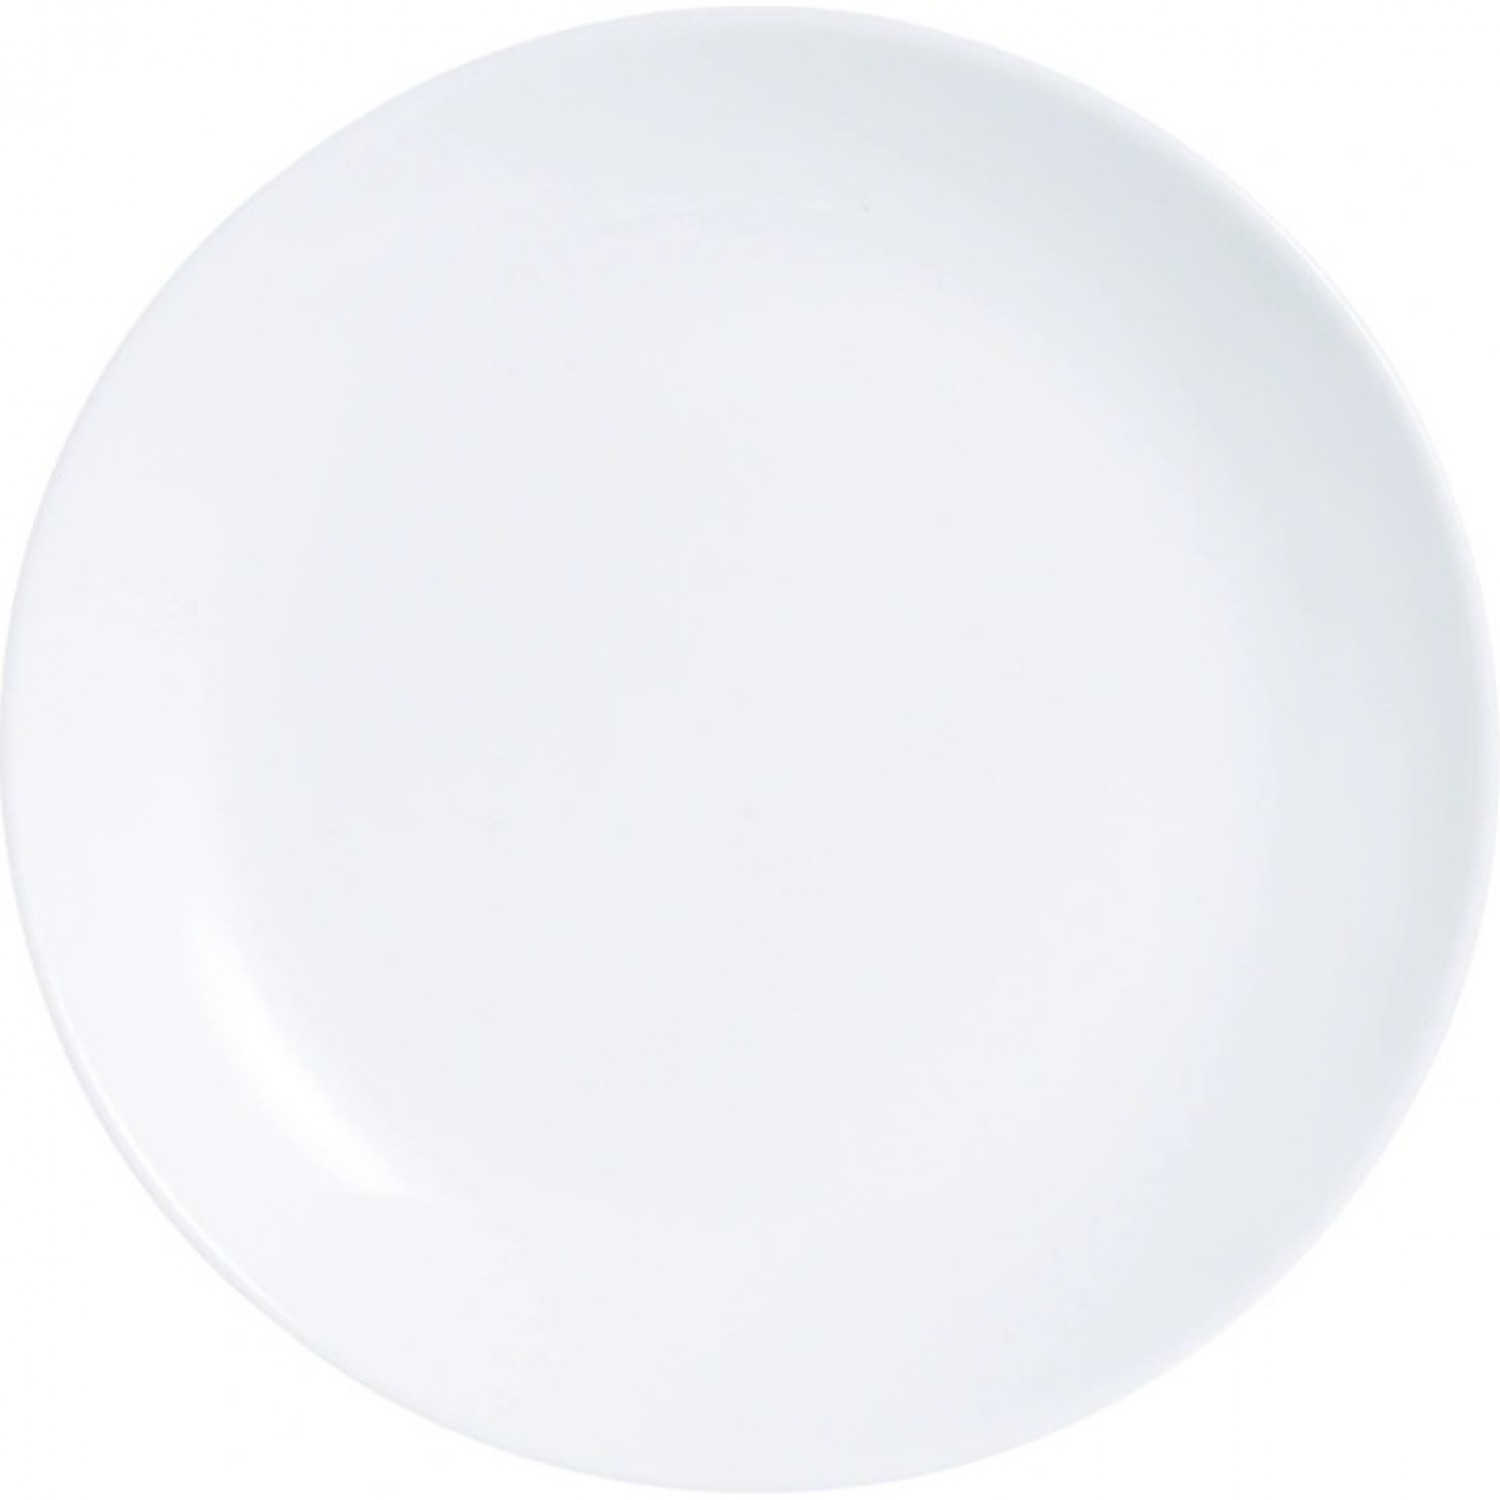 Тарелка обеденная ДИВАЛИ 25см LUMINARC D6905 (P3299) тарелка обеденная дивали марбл 25см luminarc p9908